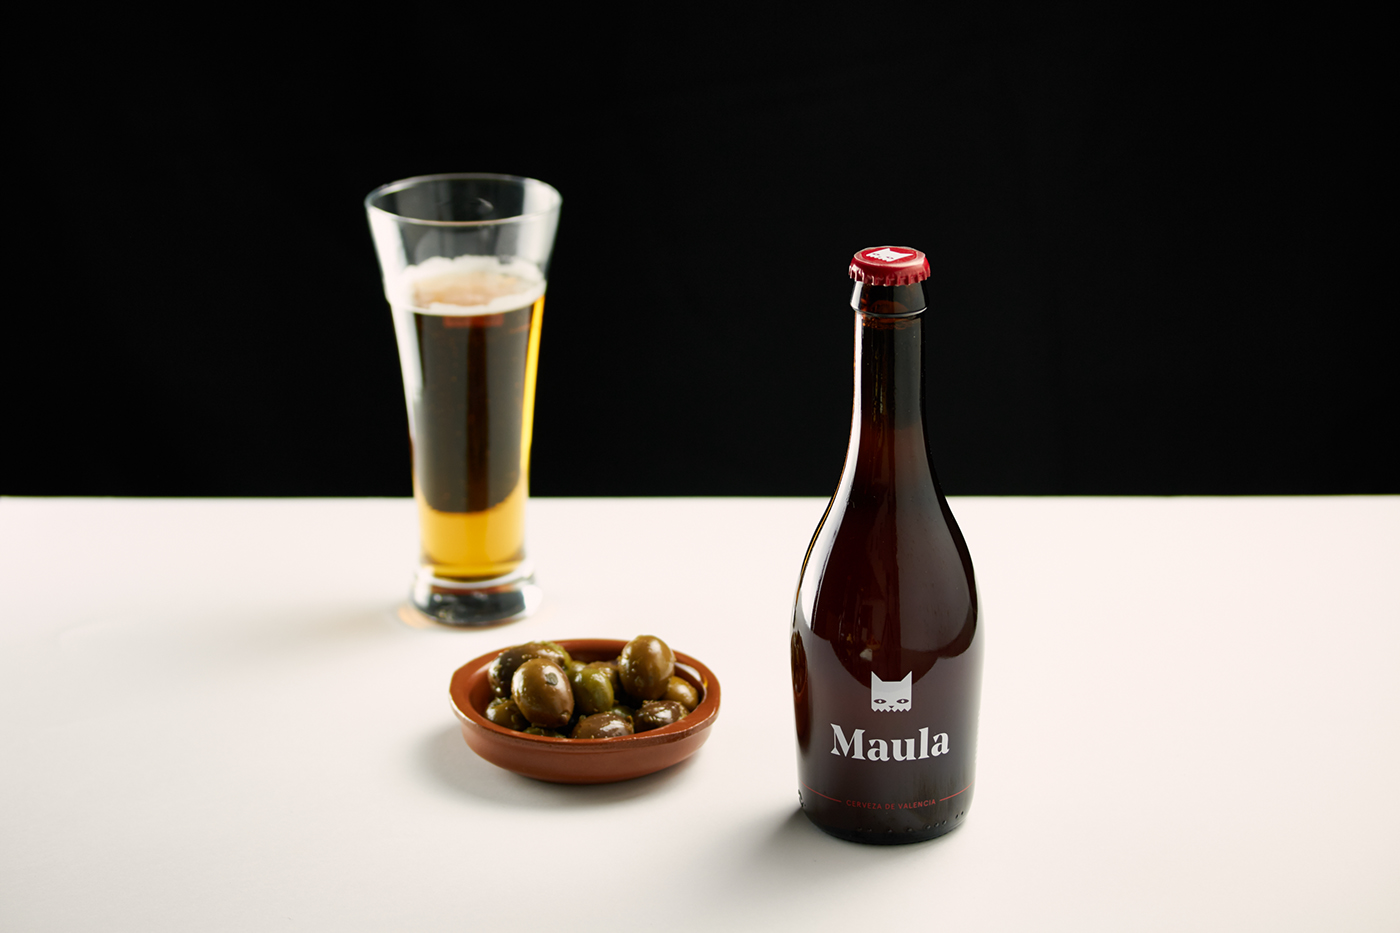 beer ale valencia mussa butoni Maula cerveza craft brewery legends